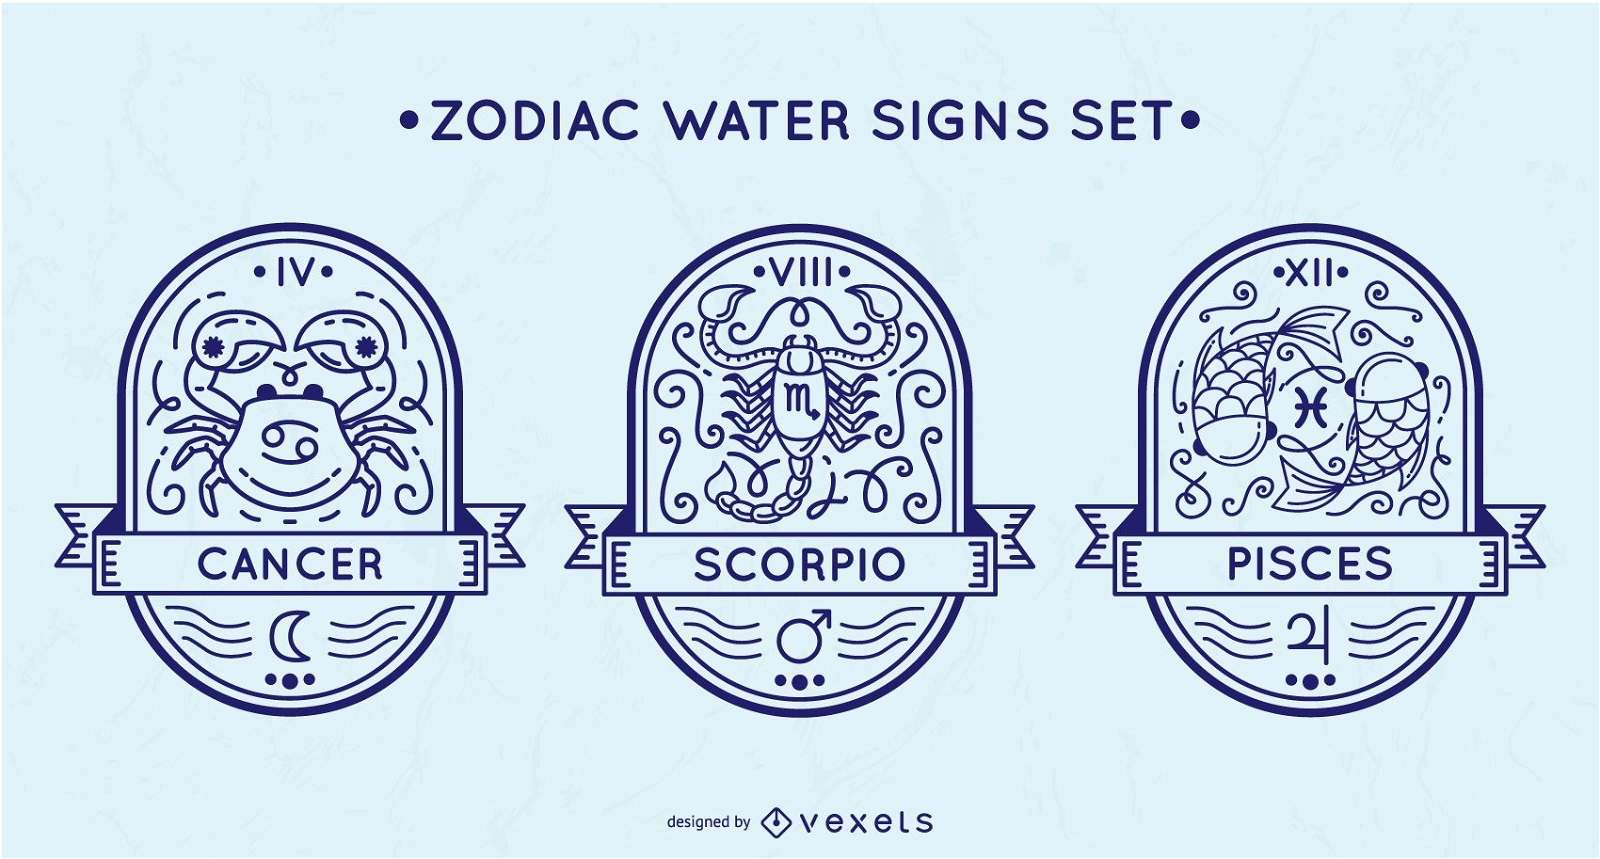 Conjunto de signos de água do Zodíaco